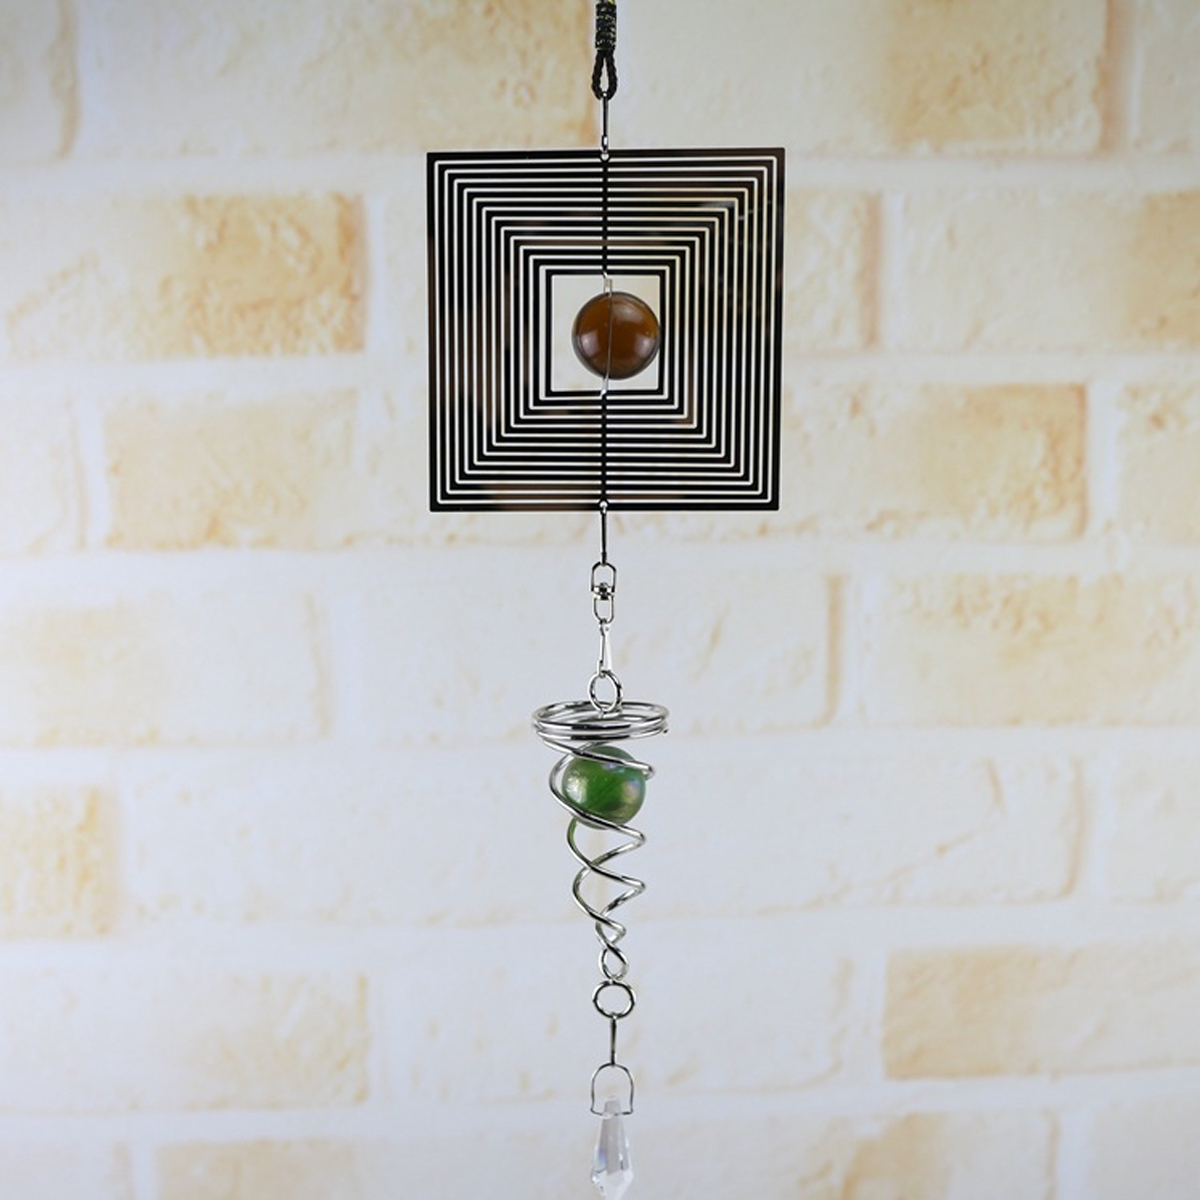 Metal-Hanging-Garden-Wind-Spinner-Round-Crystal-Ball-Bell-Garden-Home-Ornament-1682662-5